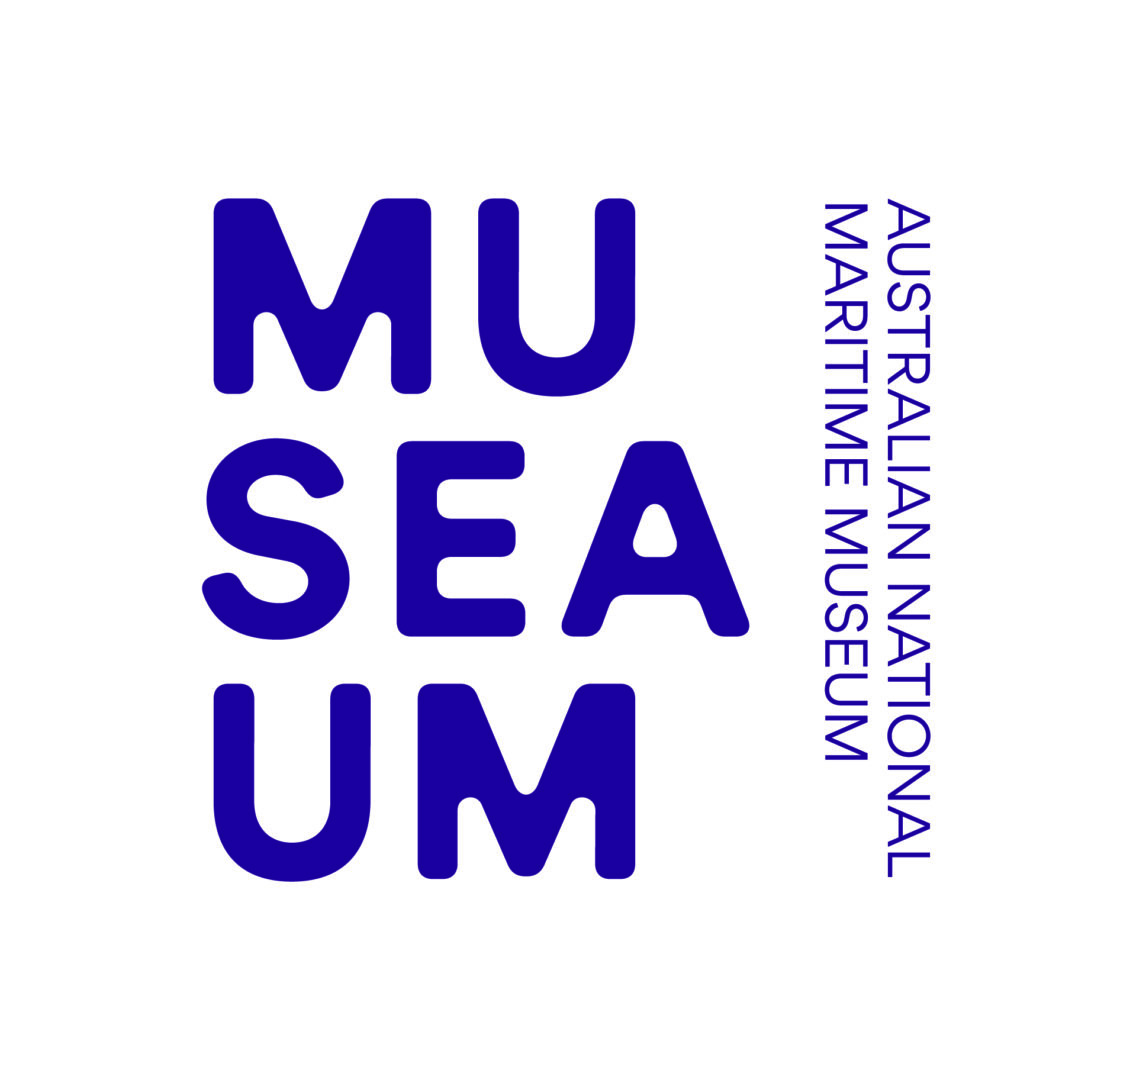 national maritime museum